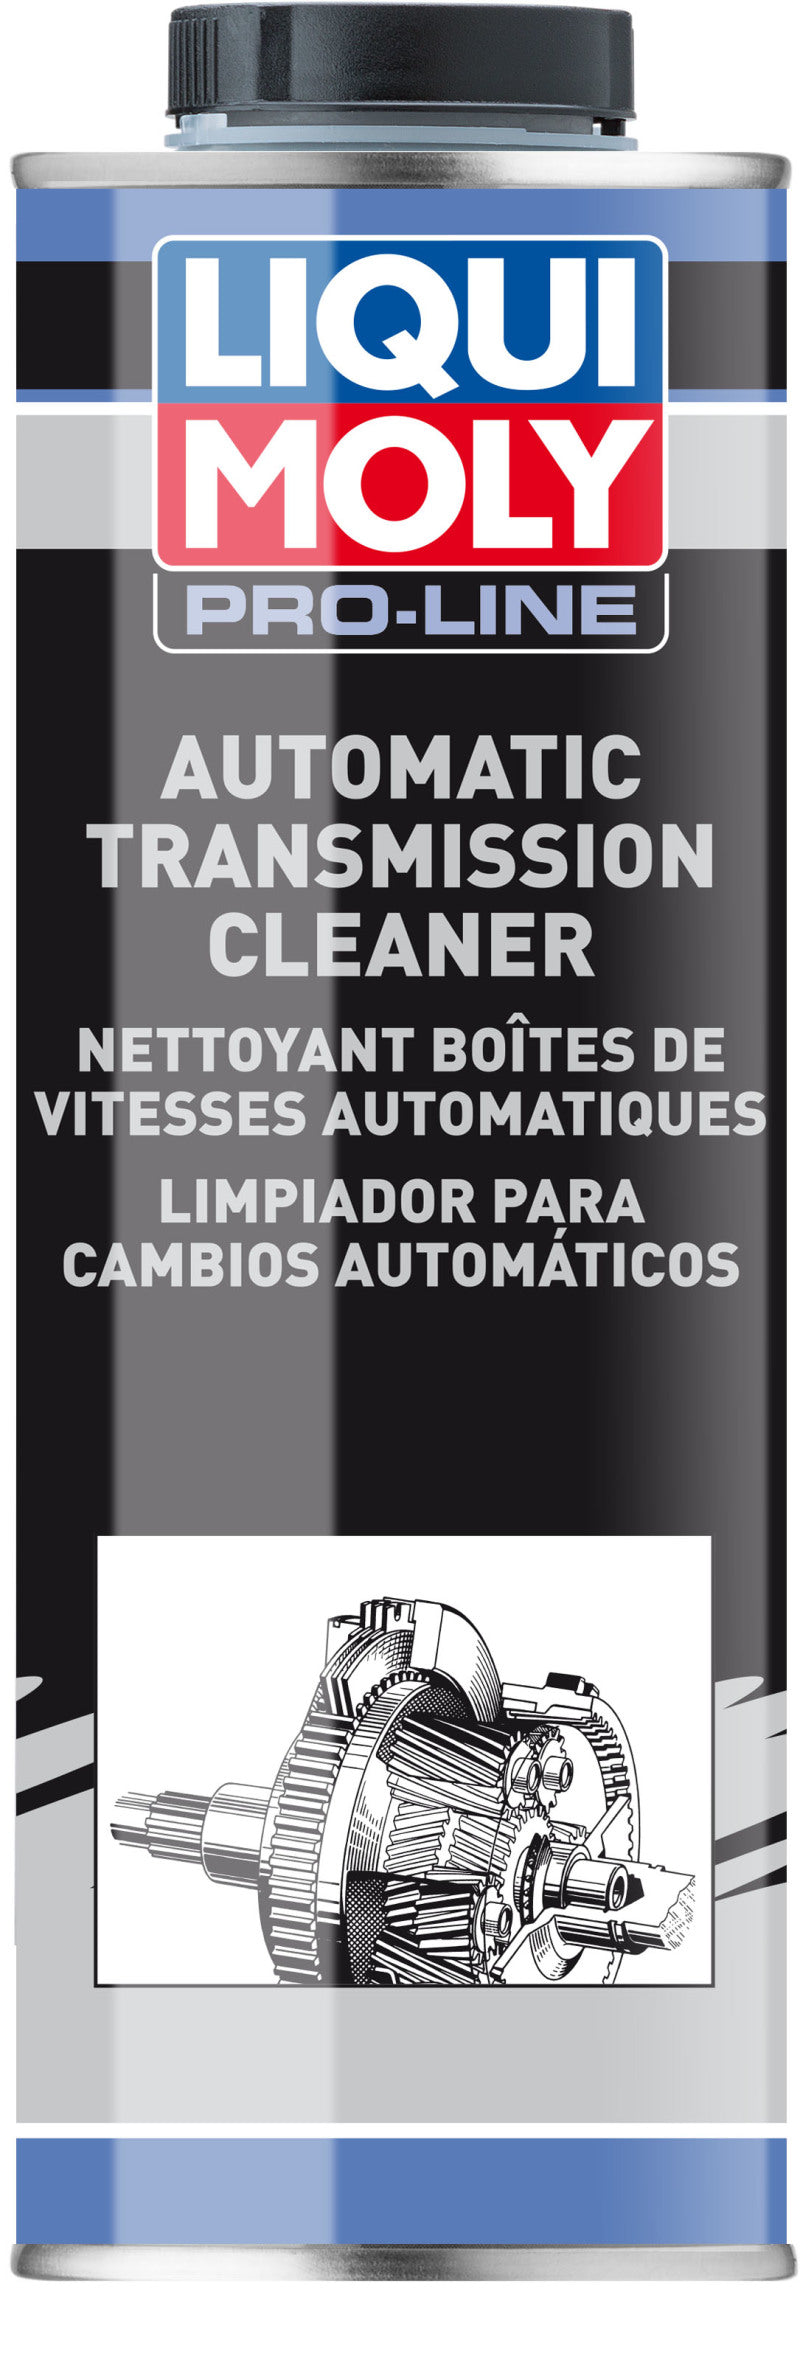 LIQUI MOLY 1L Pro-Line Automatic Transmission Cleaner.